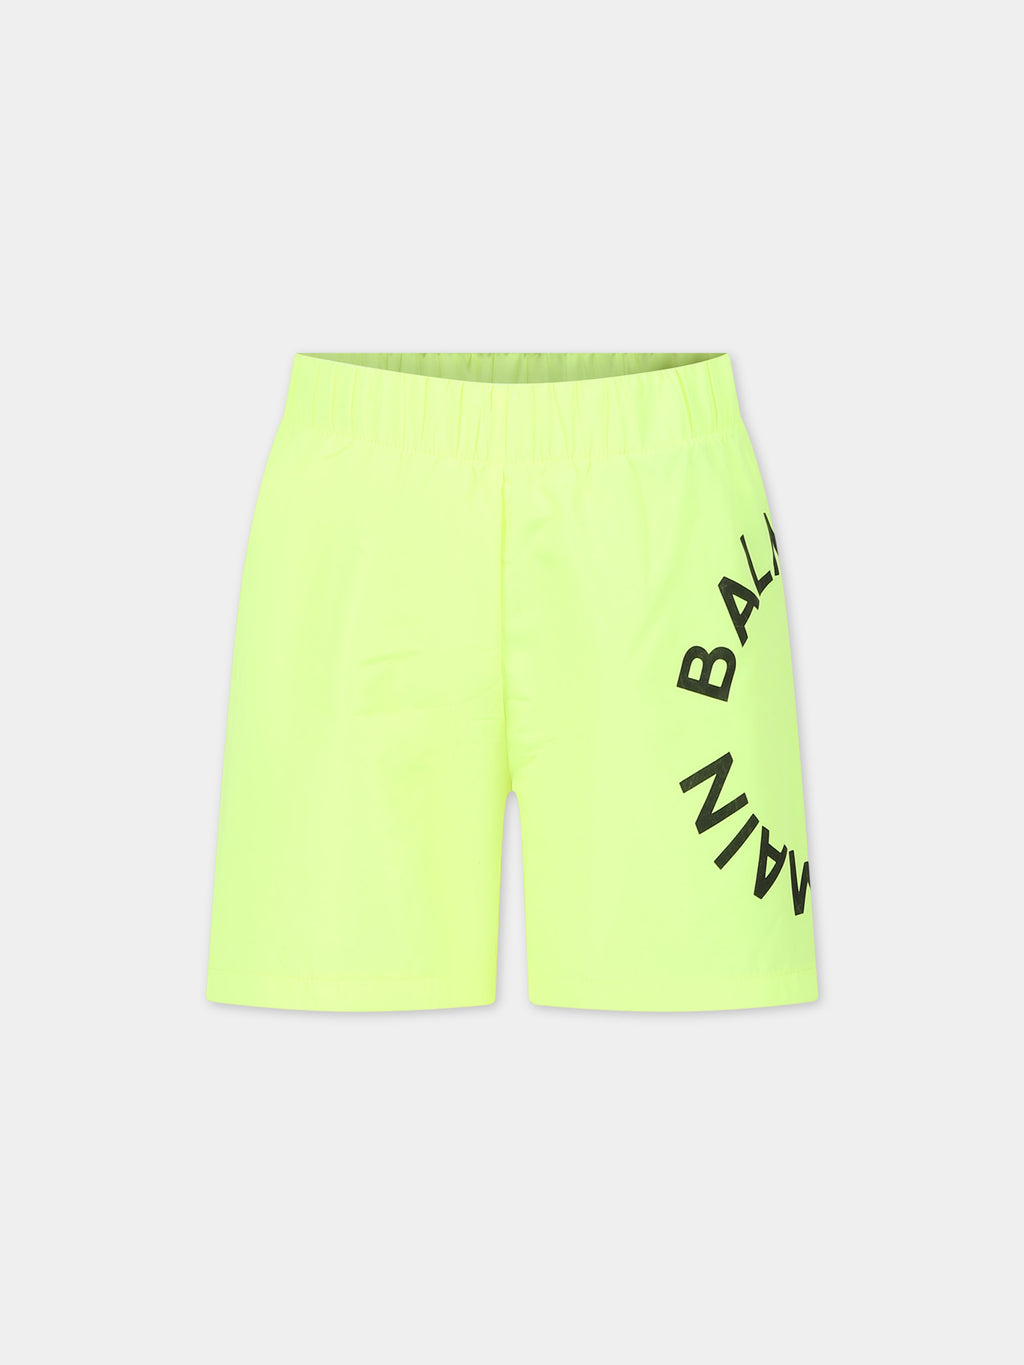 Yellow swim shorts for boy with logo